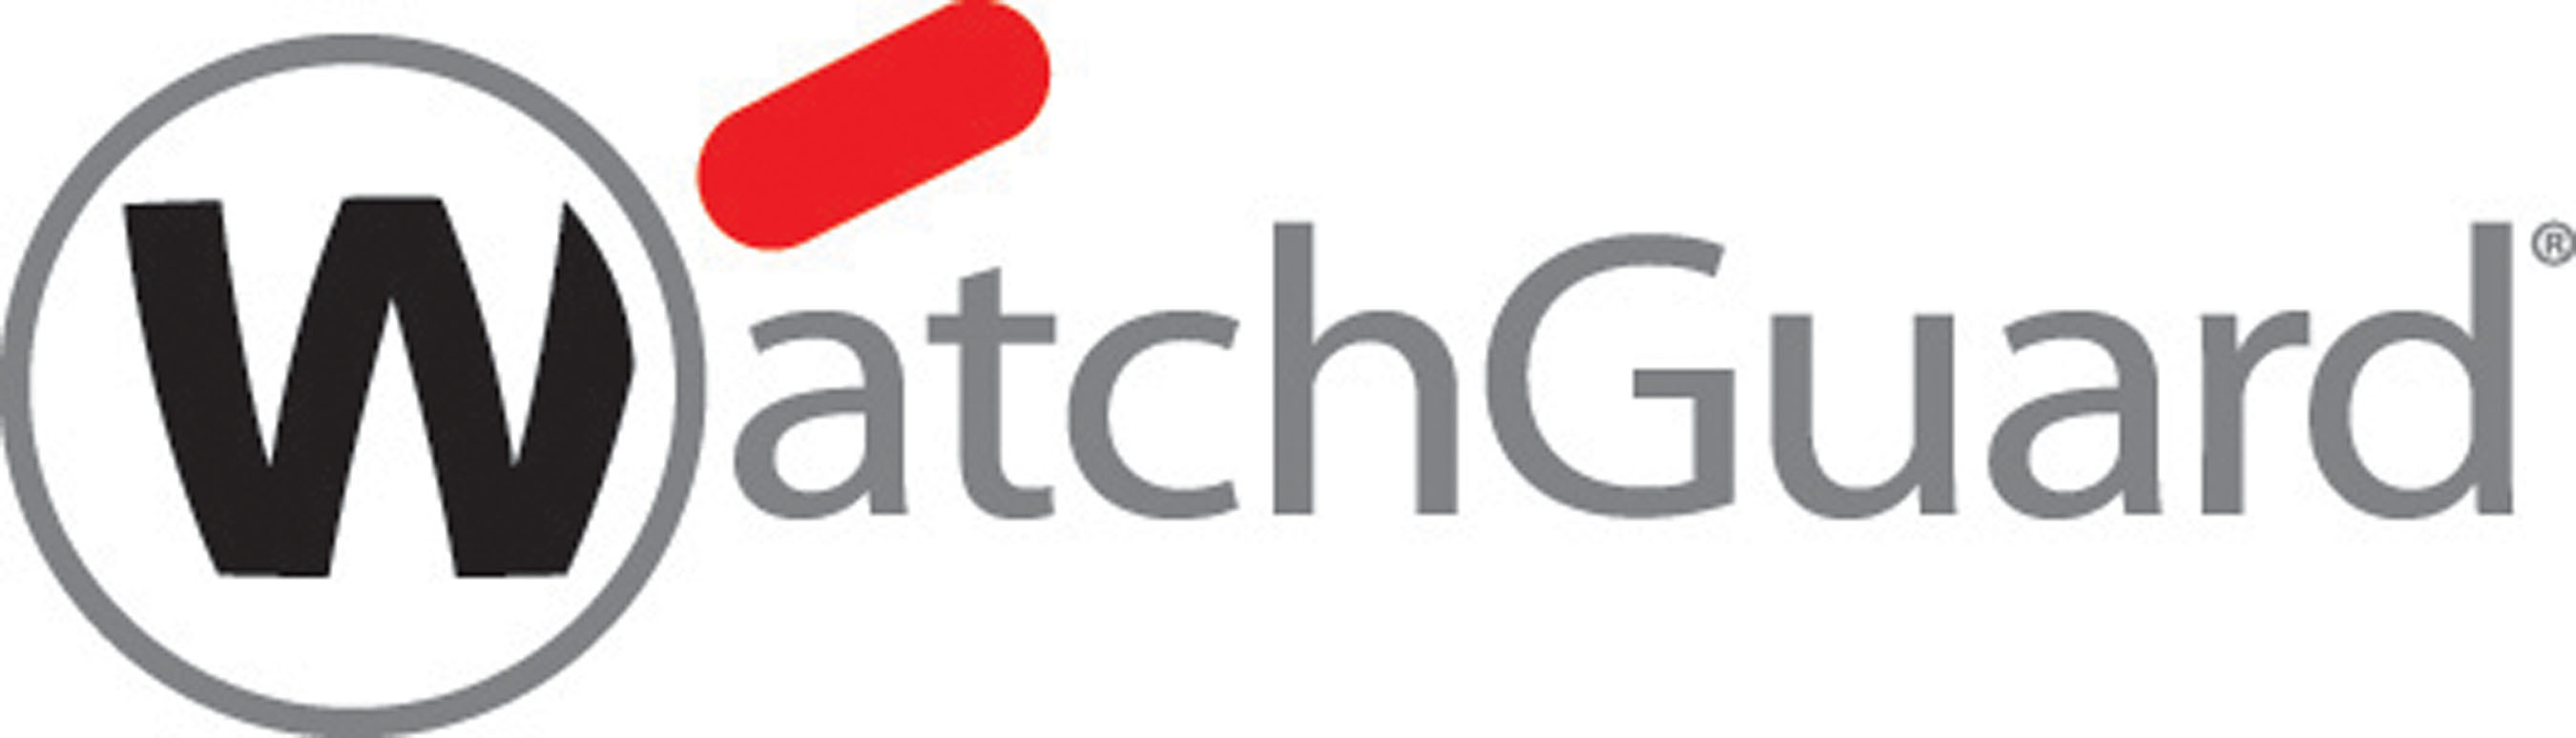 WatchGuard Technologies, Inc. Logo.